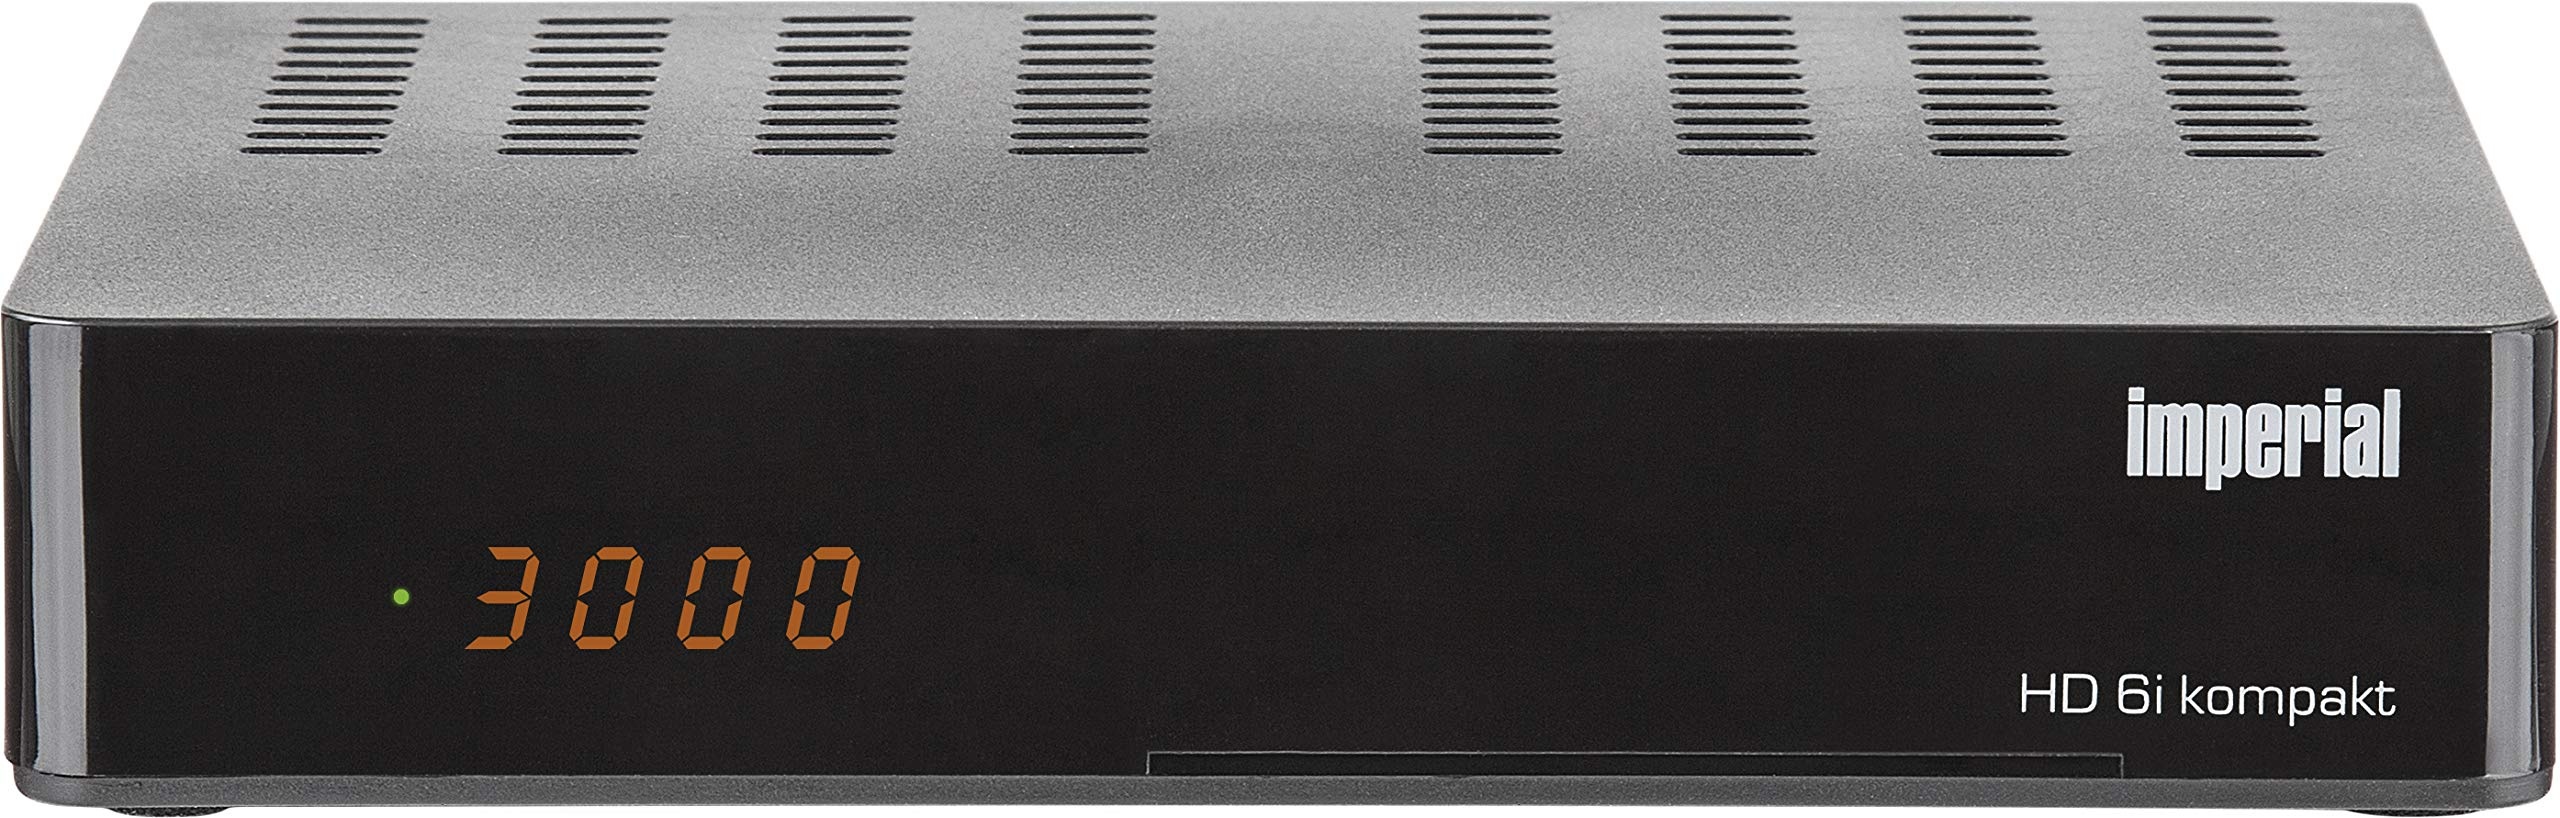 Imperial HD6i kompakt HD Sat Receiver - Smart (DVB-S2, Alexa Voice, Sat to IP, Web-Portal, PVR Ready) schwarz